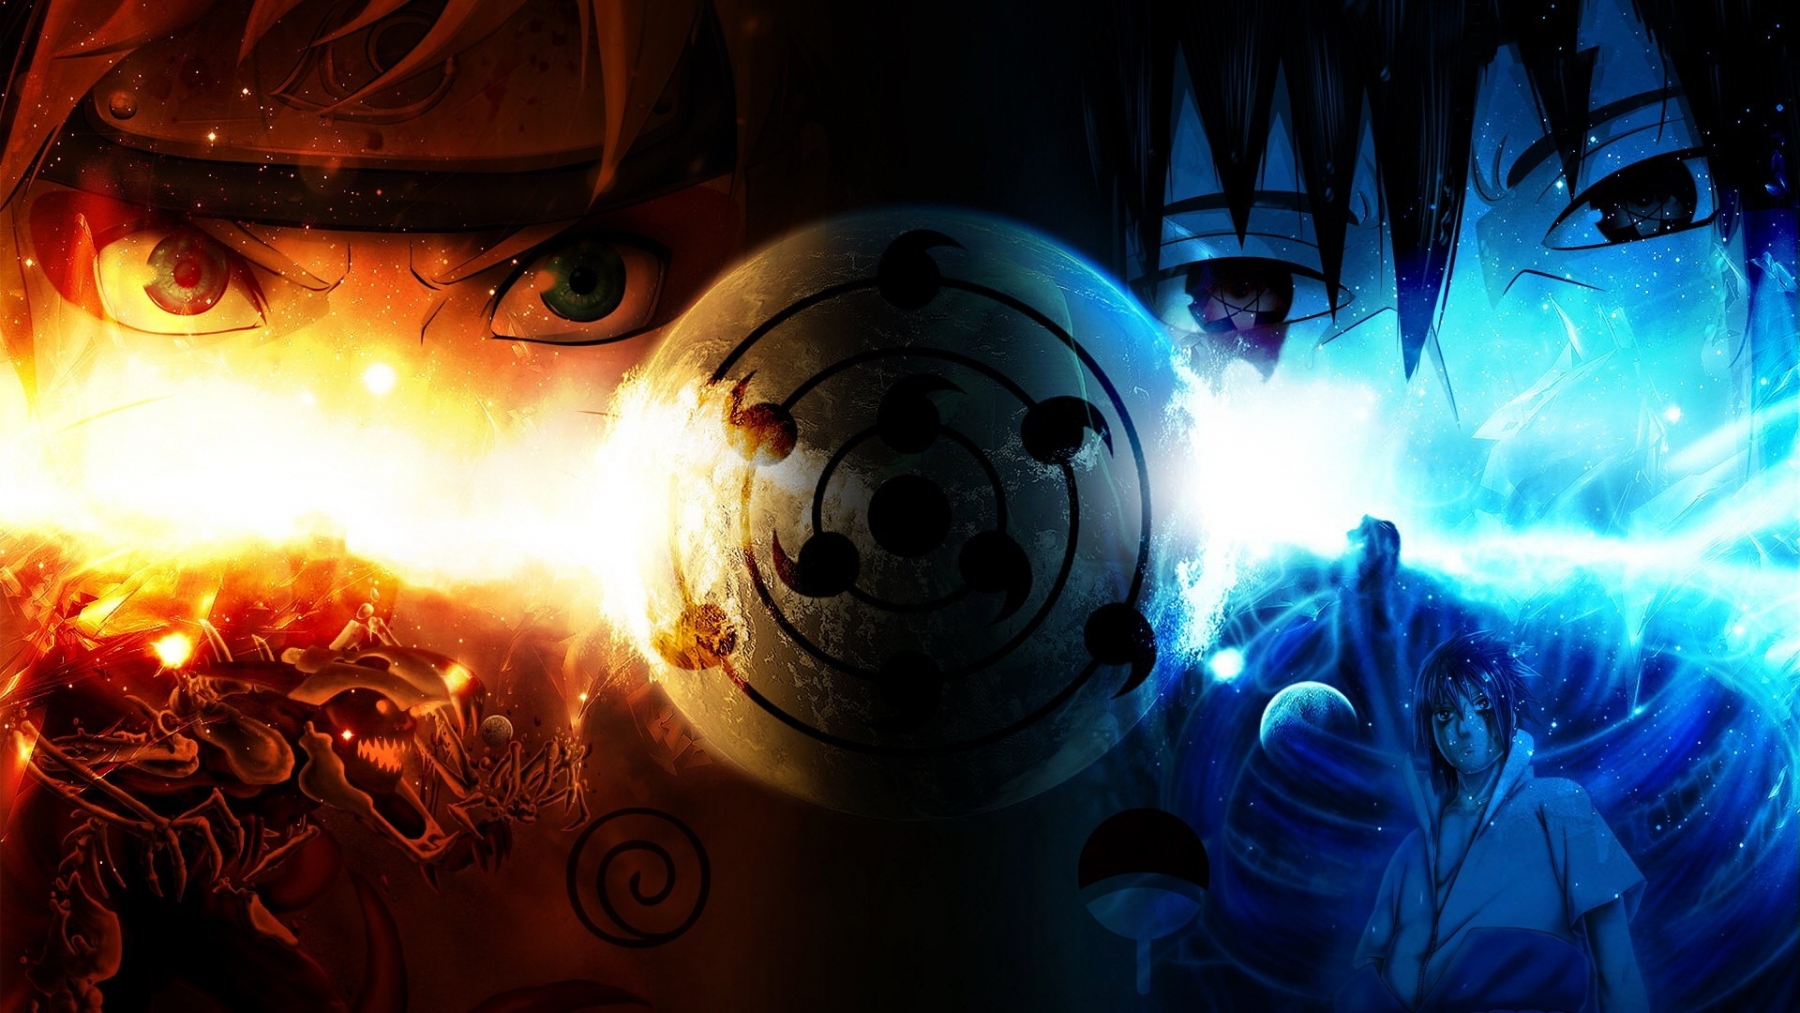 Narutos legacy  Live Wallpaper by burpone on DeviantArt